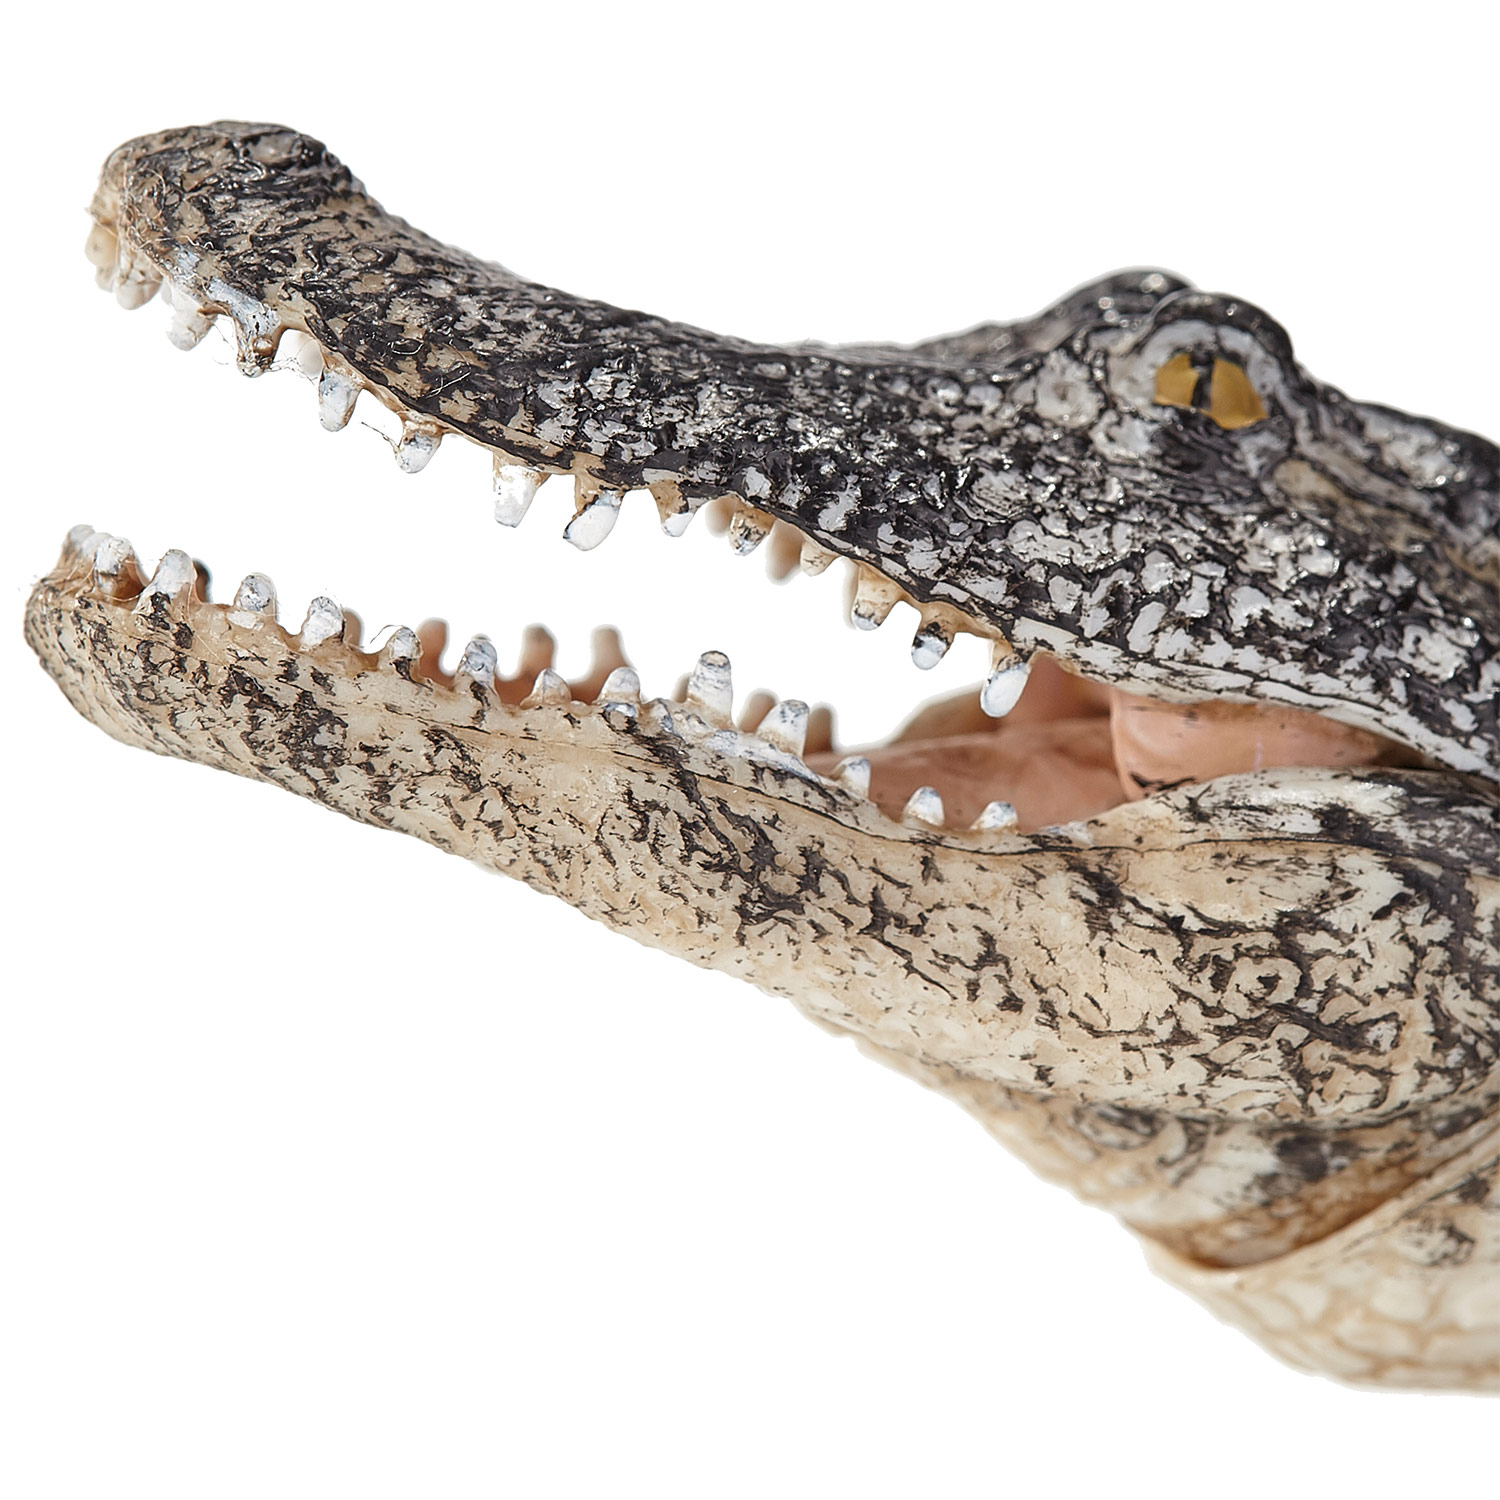 Mojo Wildlife Alligator mit beweglichem Kiefer – 387168